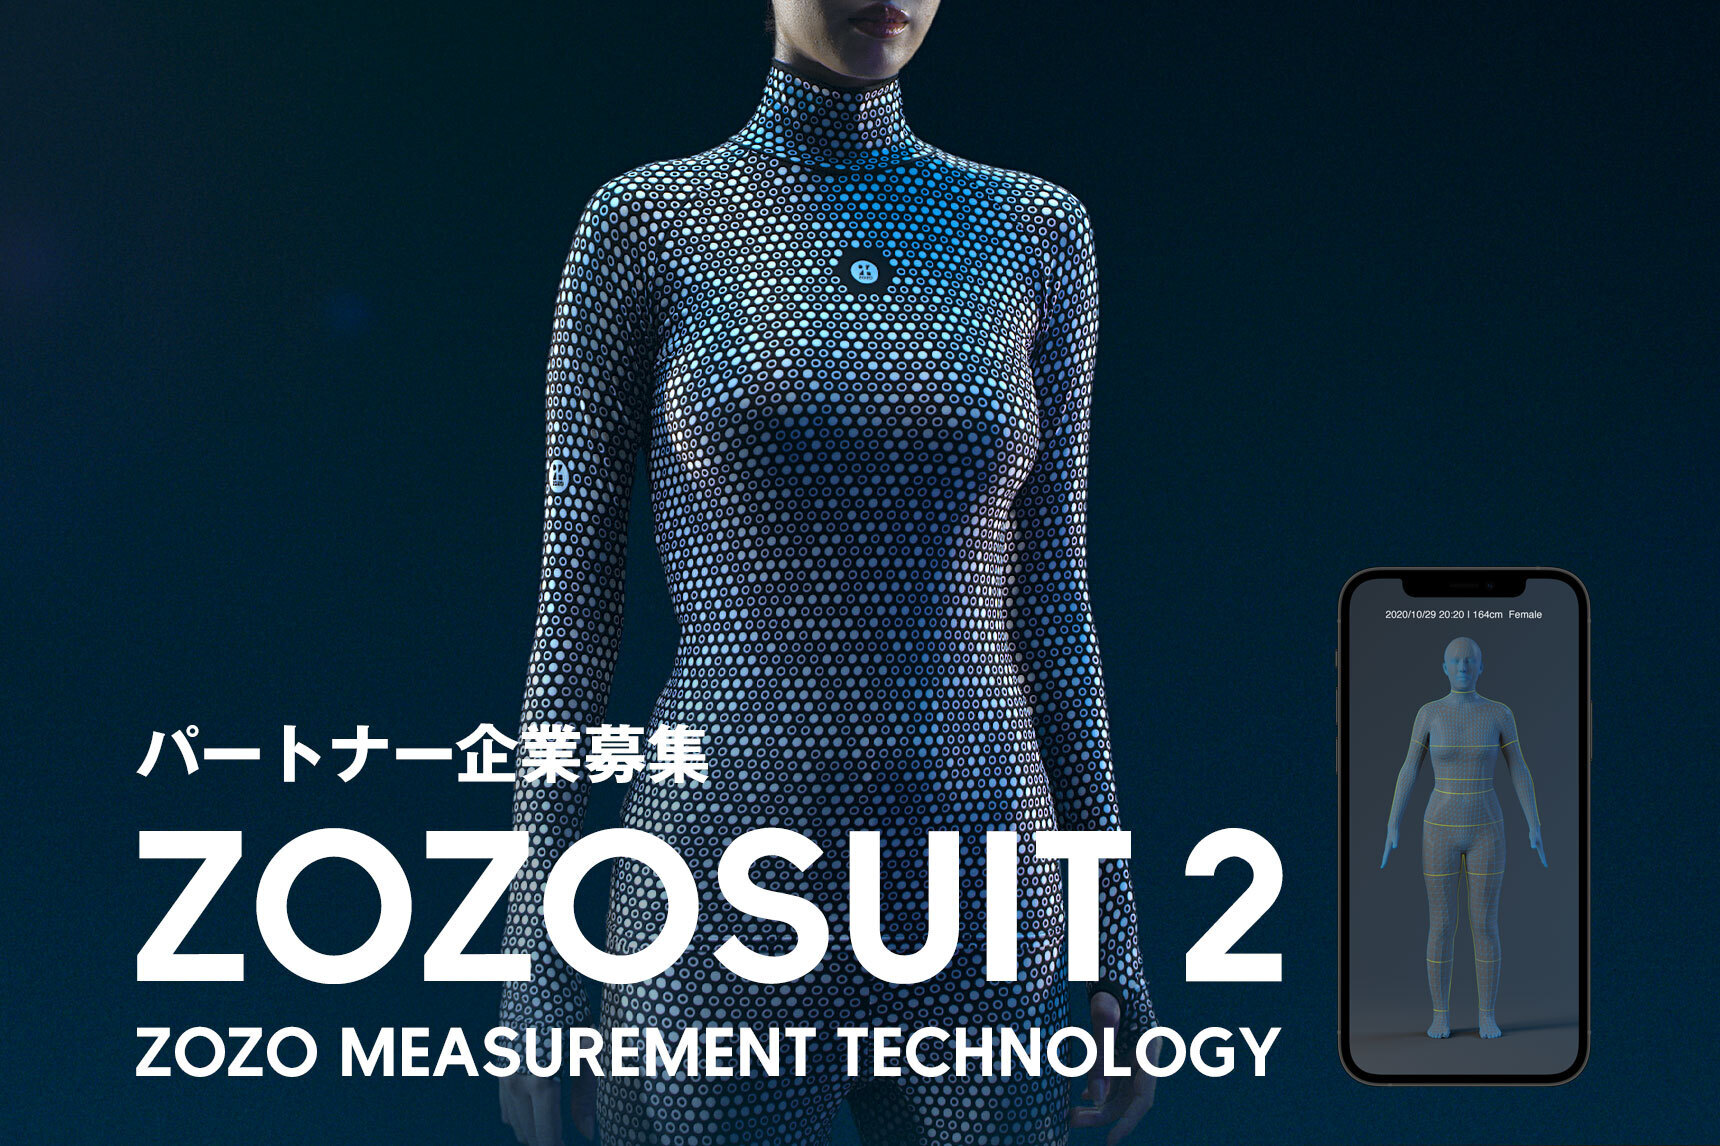 3D計測用ボディースーツ「ZOZOSUIT 2」を発表 ZOZOSUIT  2・ZOZOMATの計測テクノロジーを活用した新サービス共創のパートナー企業を募集 株式会社ZOZO